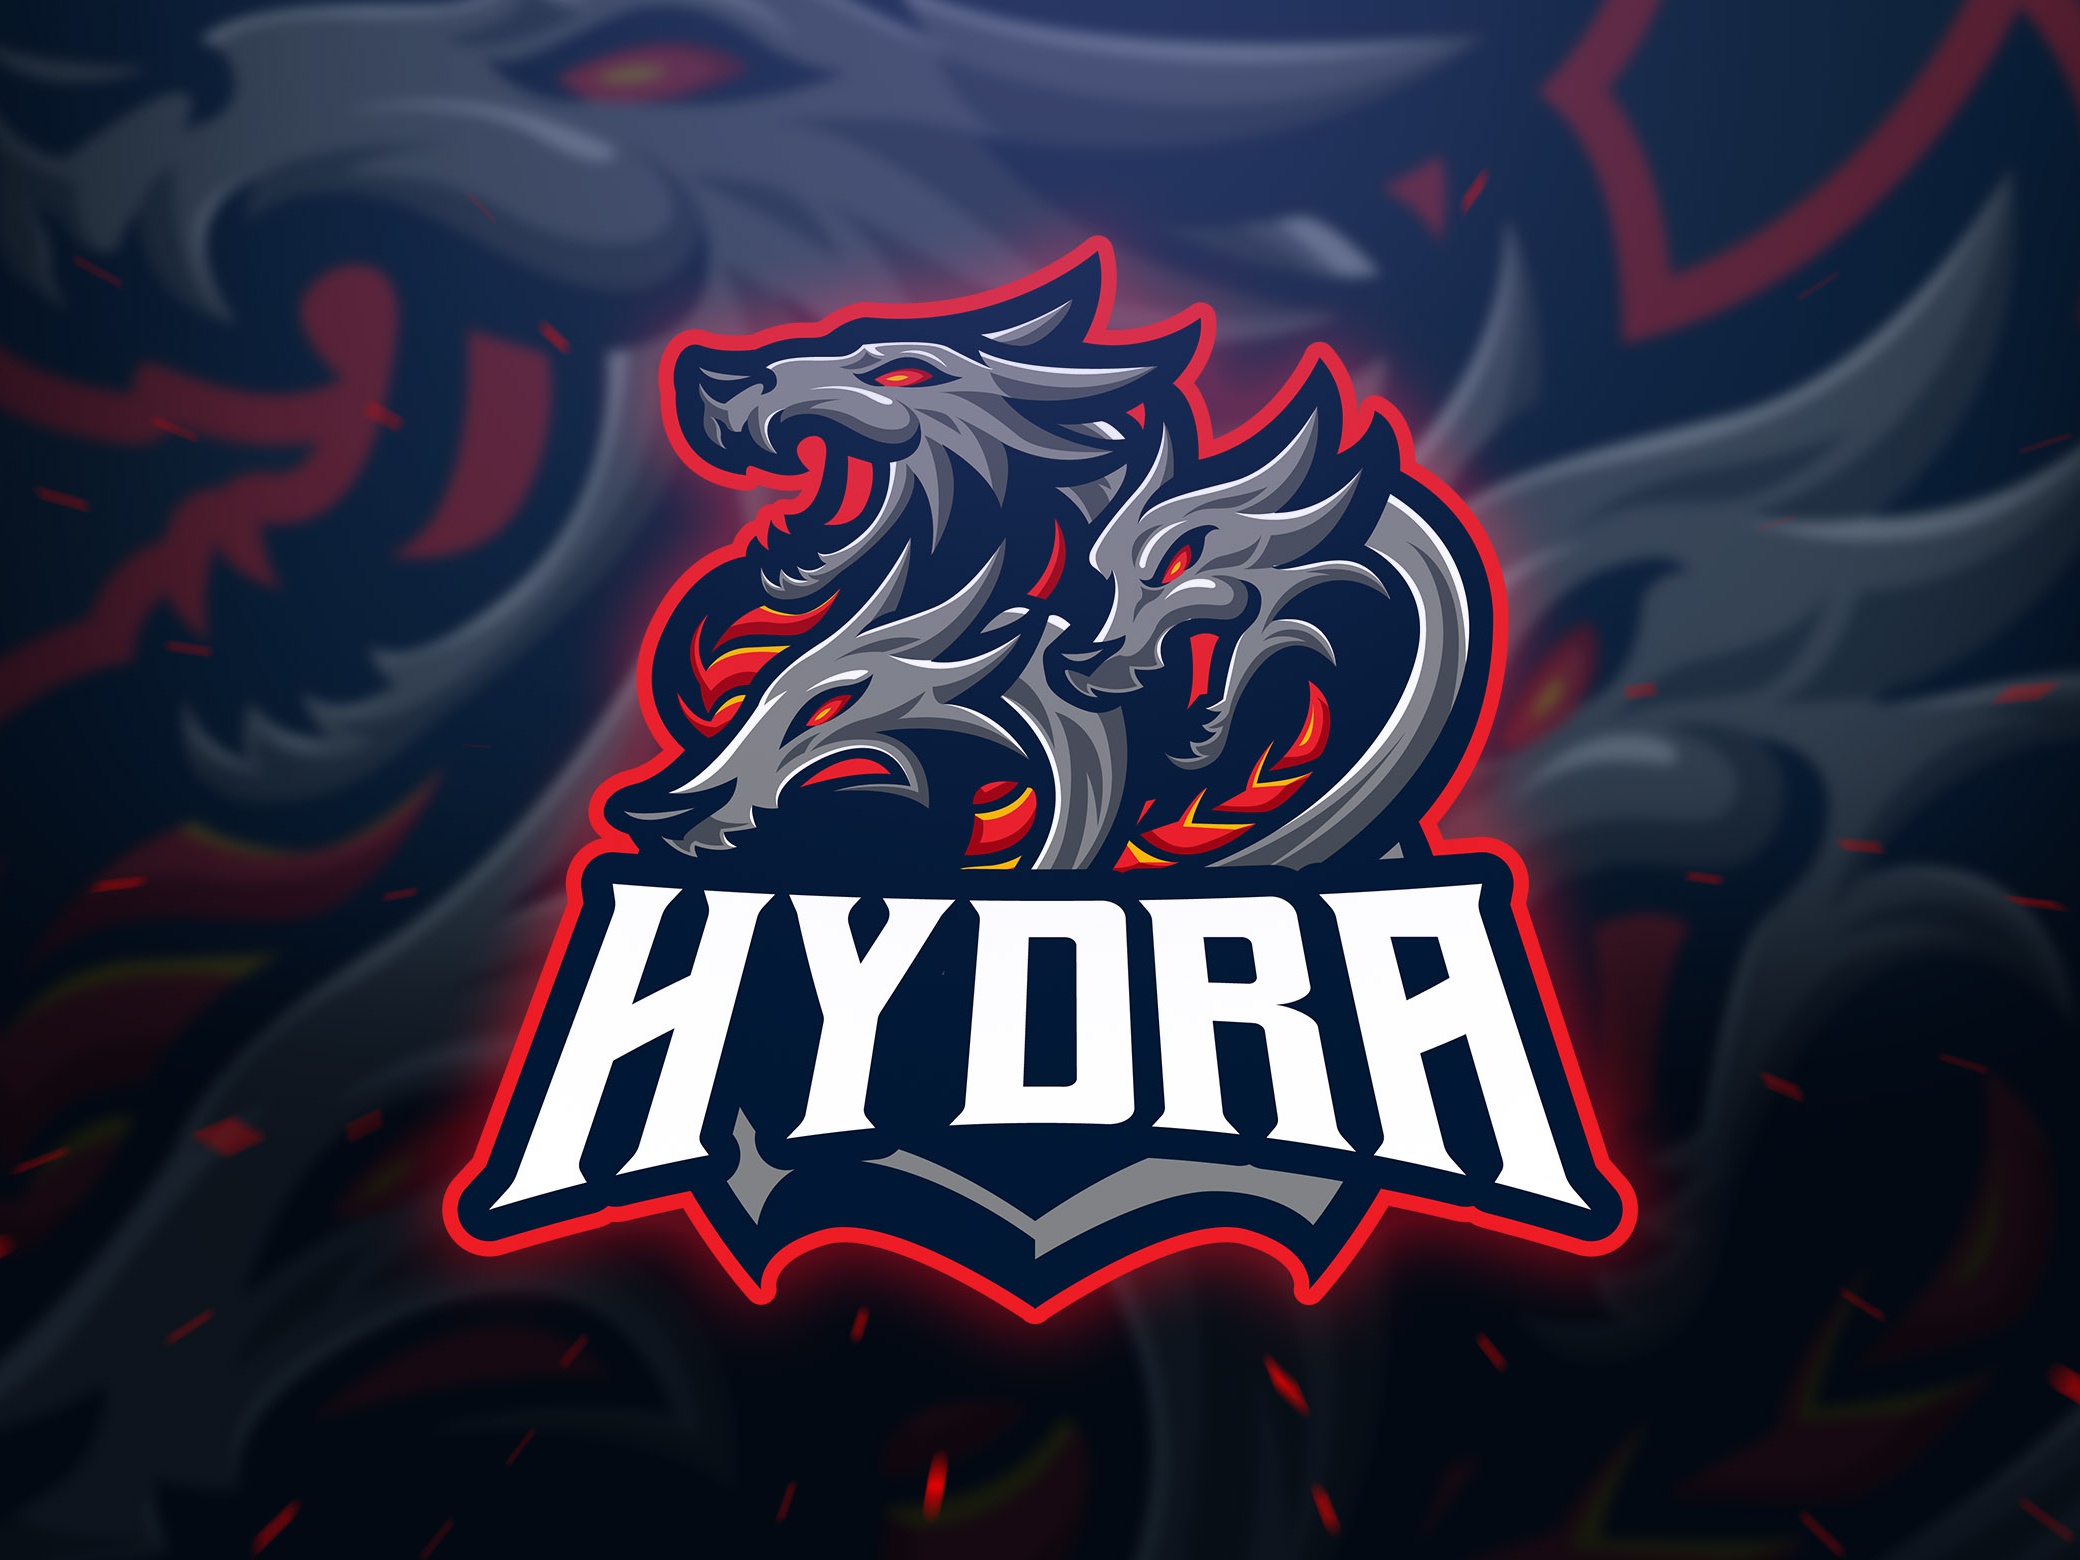 Hydra вход гидра